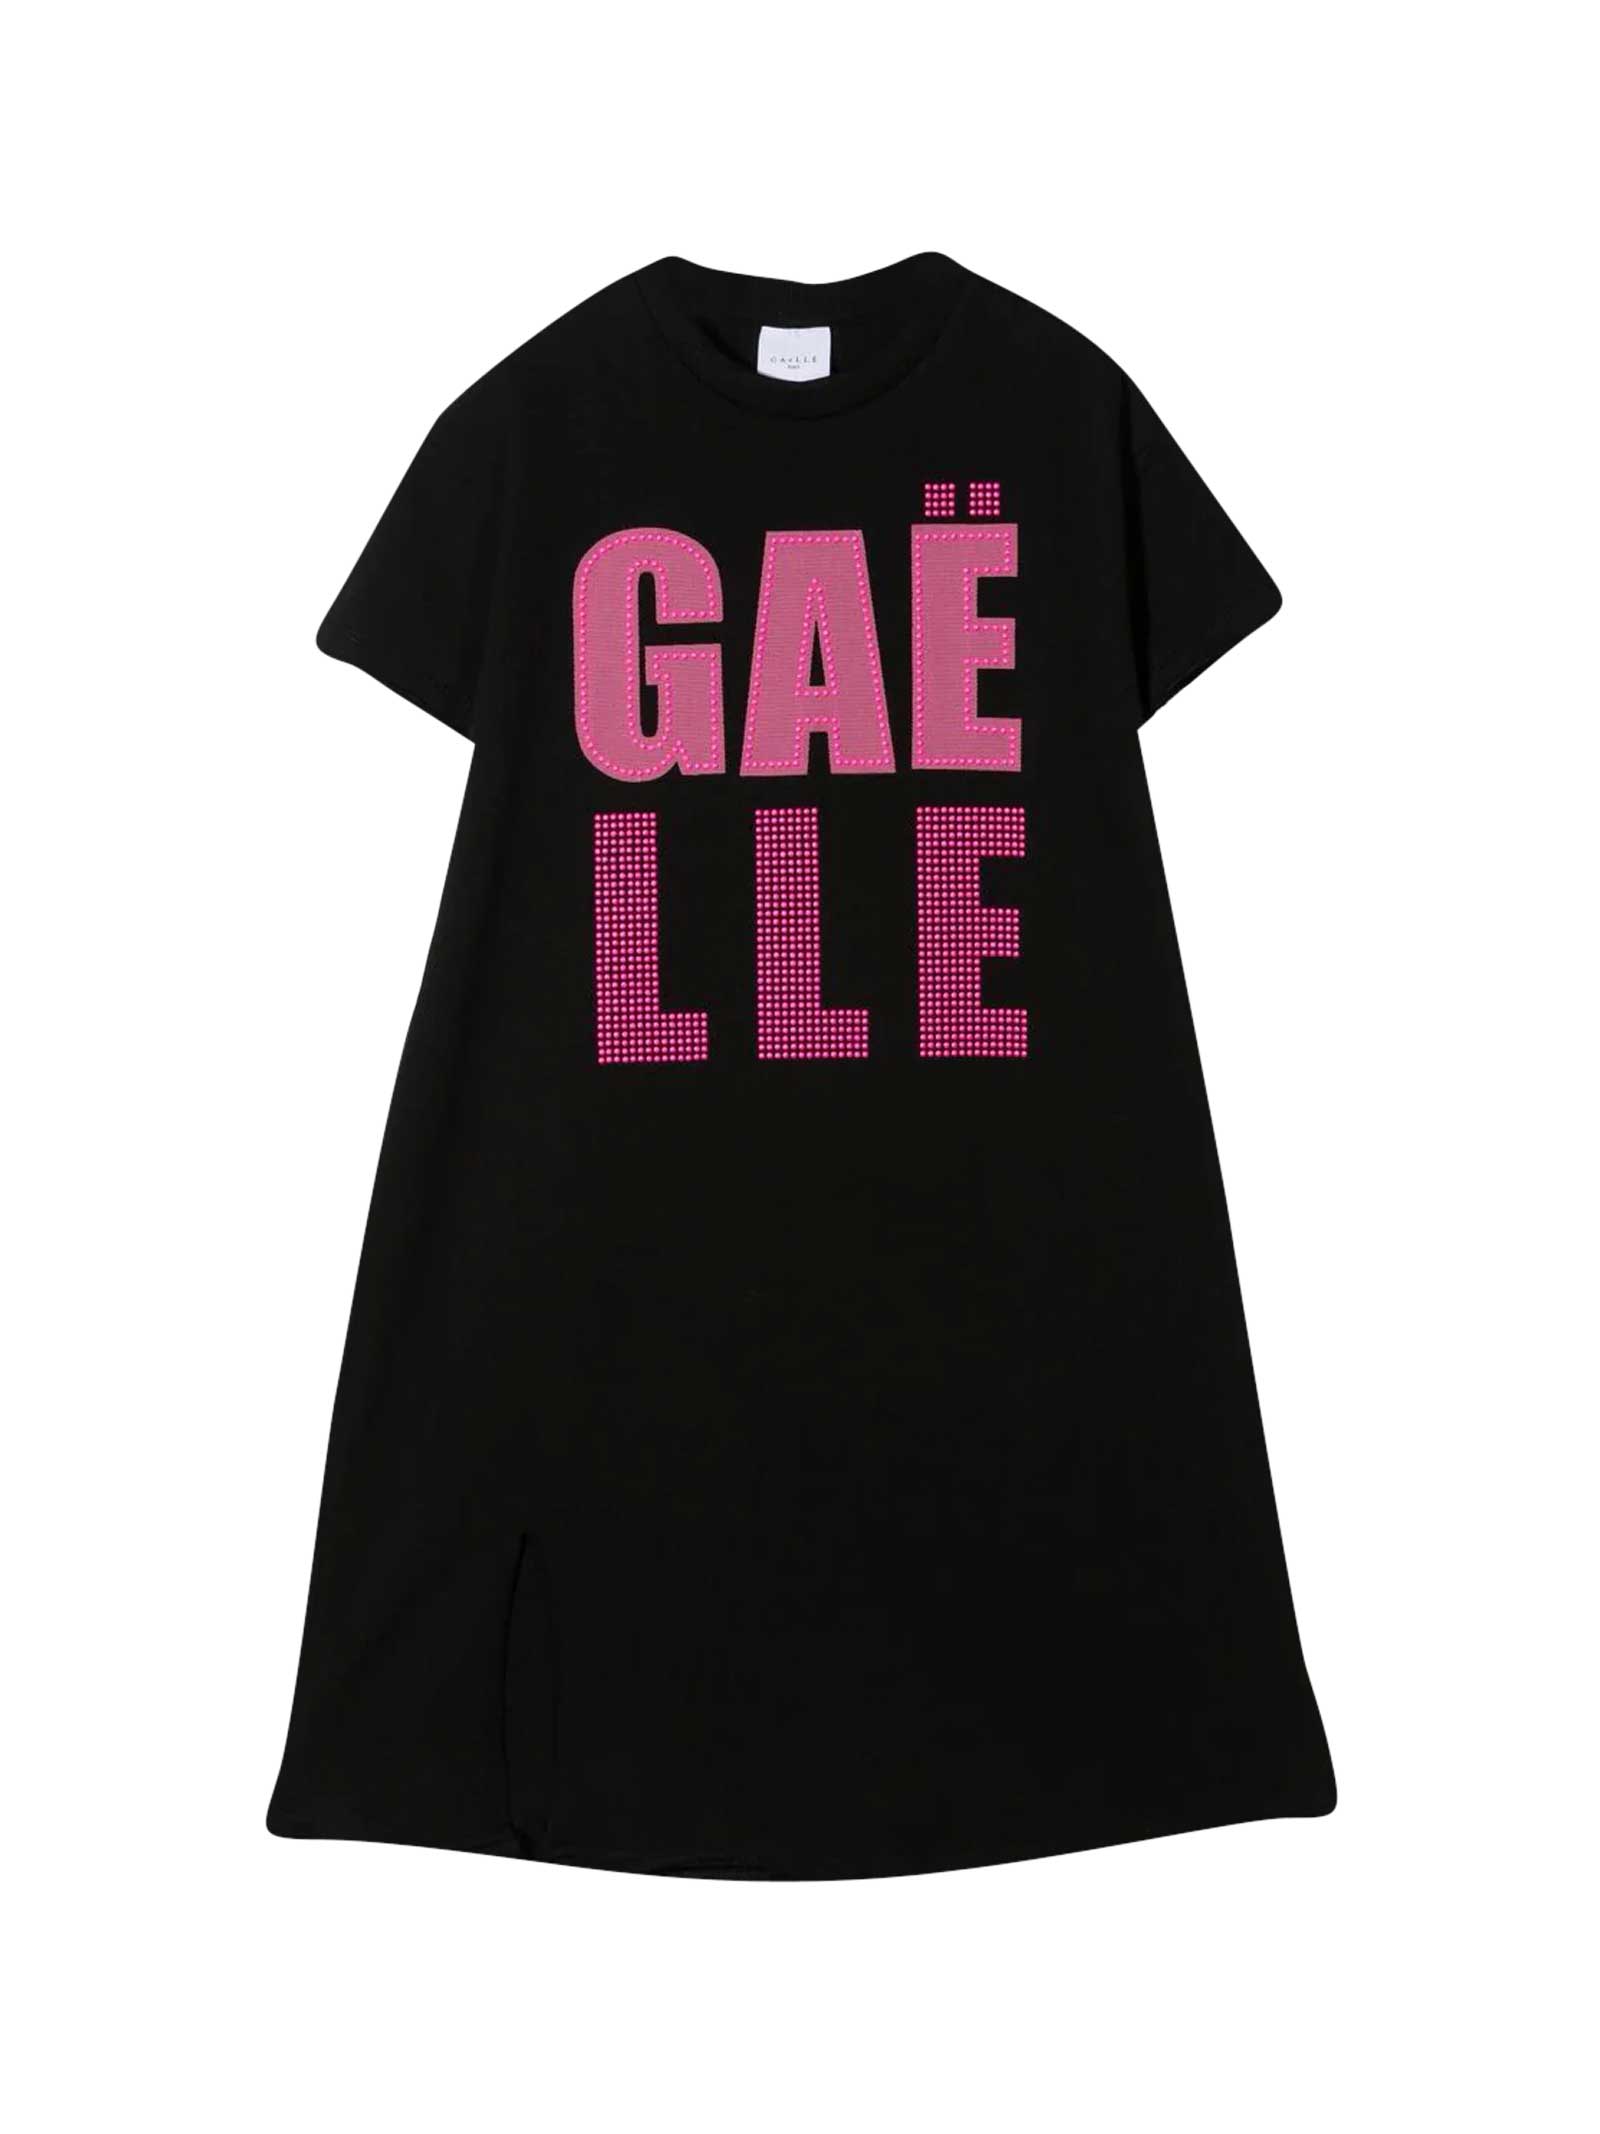 Gaelle Bonheur Paris Kids Black Teen T-shirt Dress